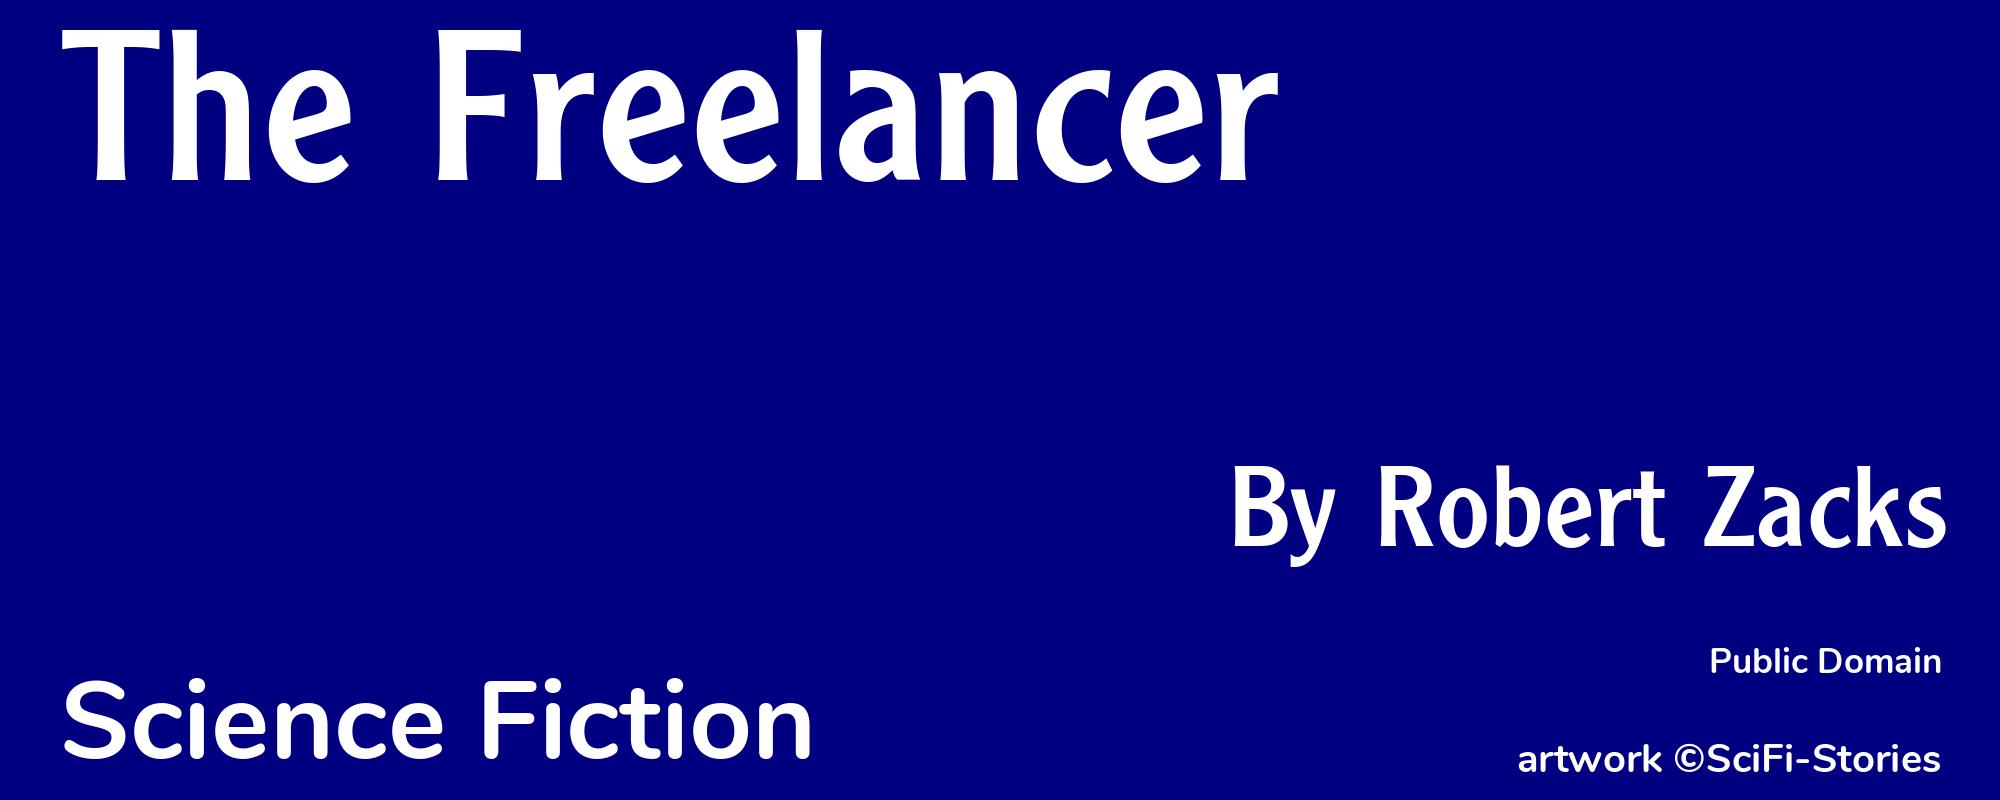 The Freelancer - Cover